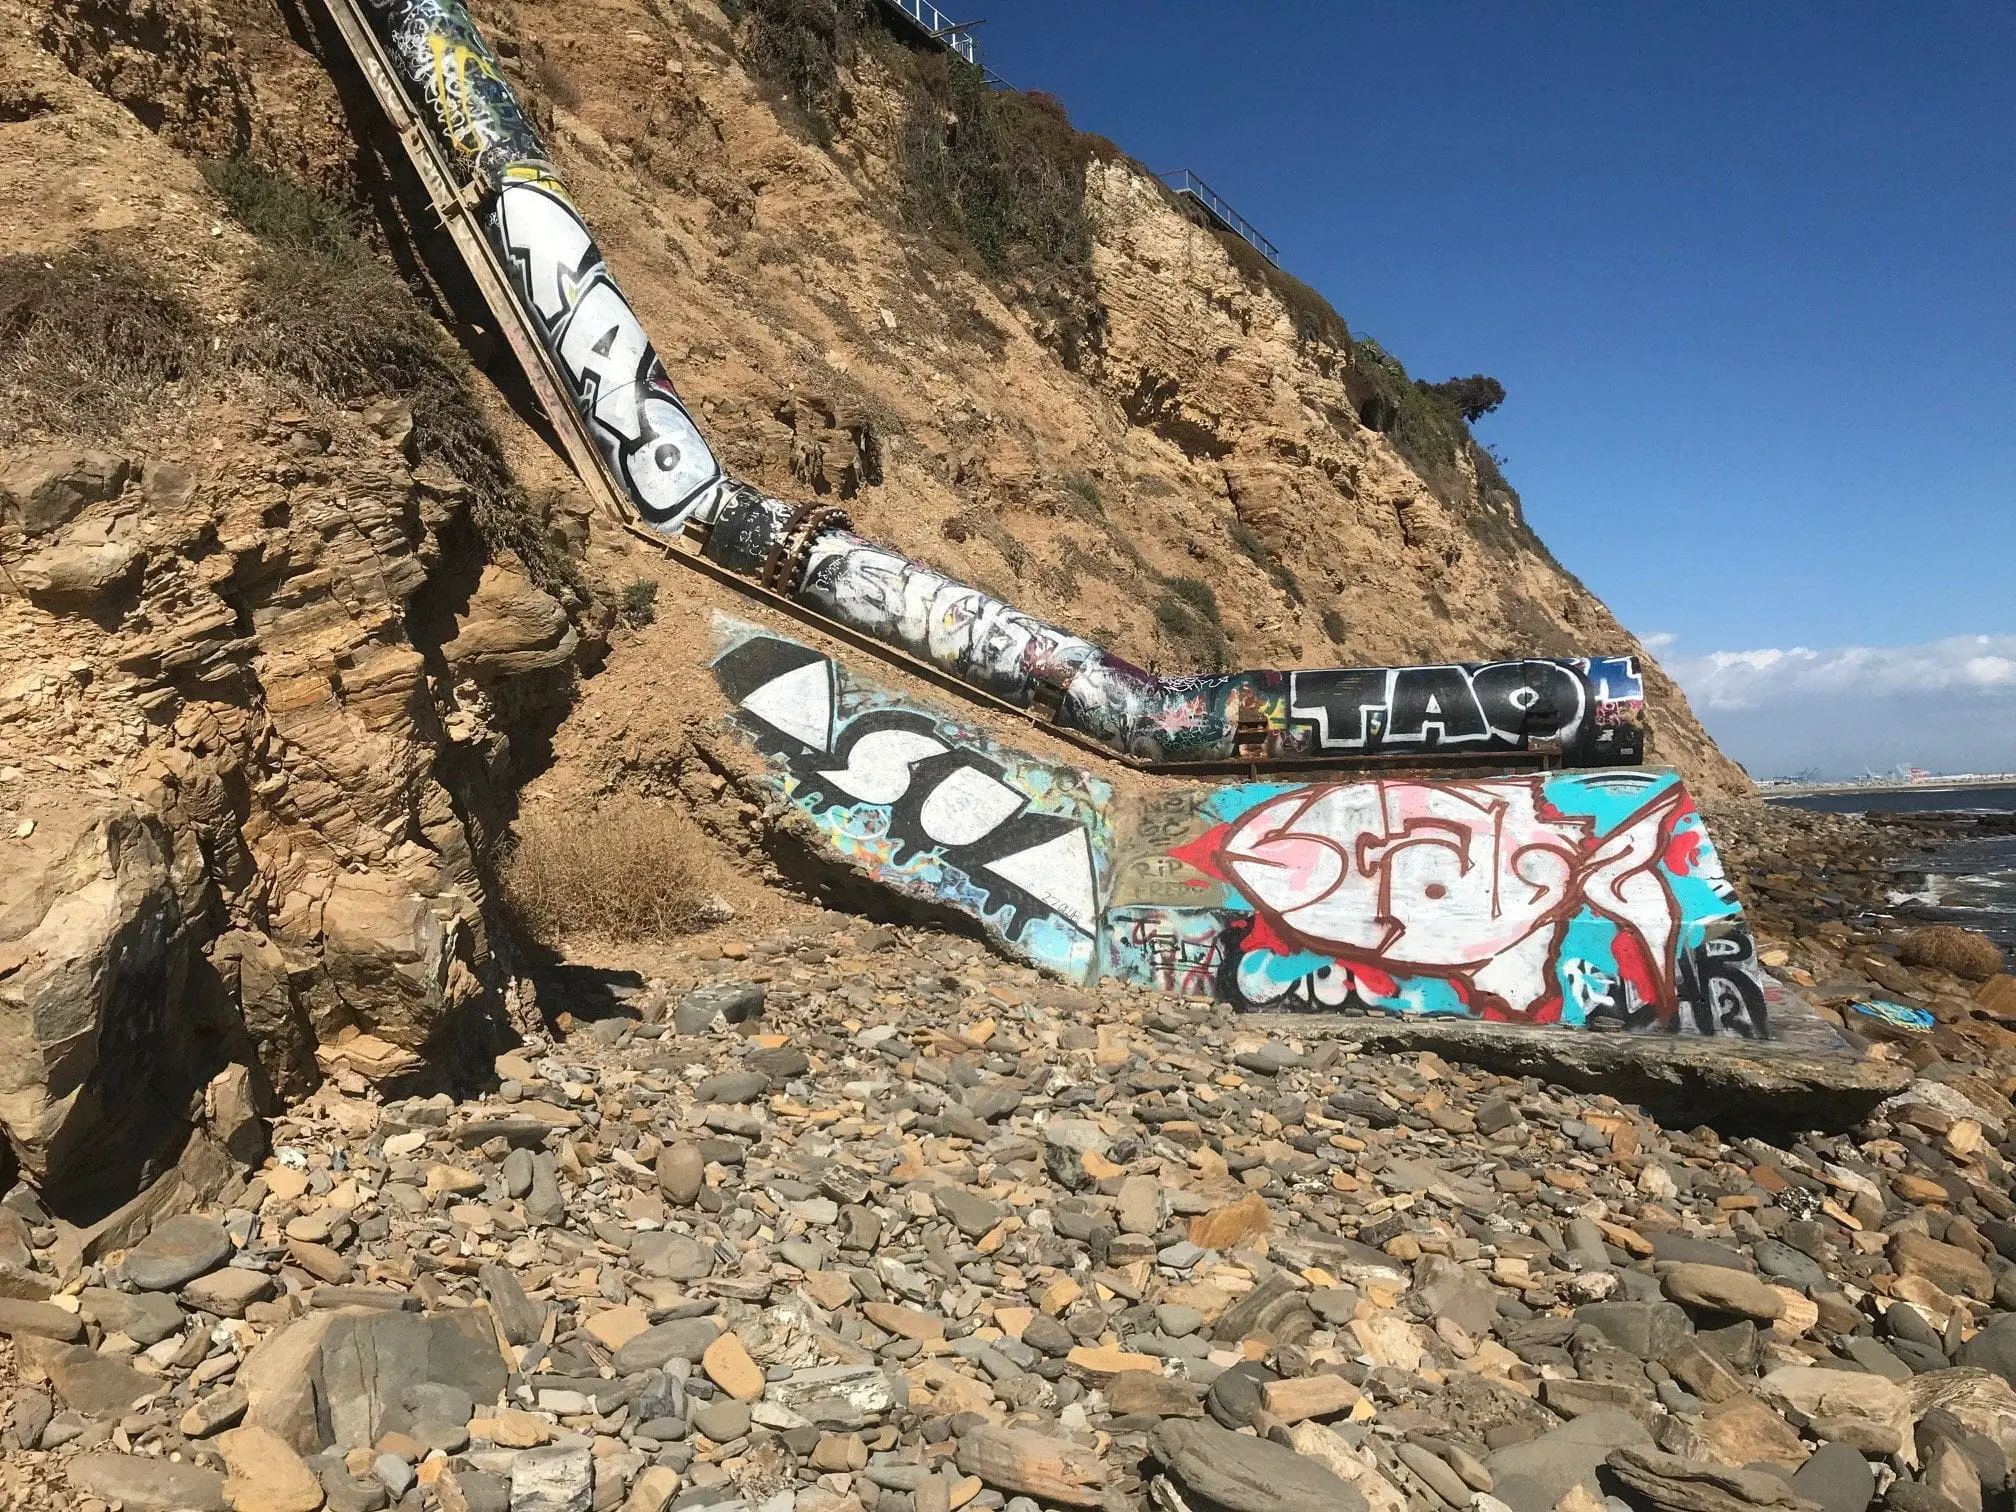 San Pedro Sunken City drain pipe graffiti art